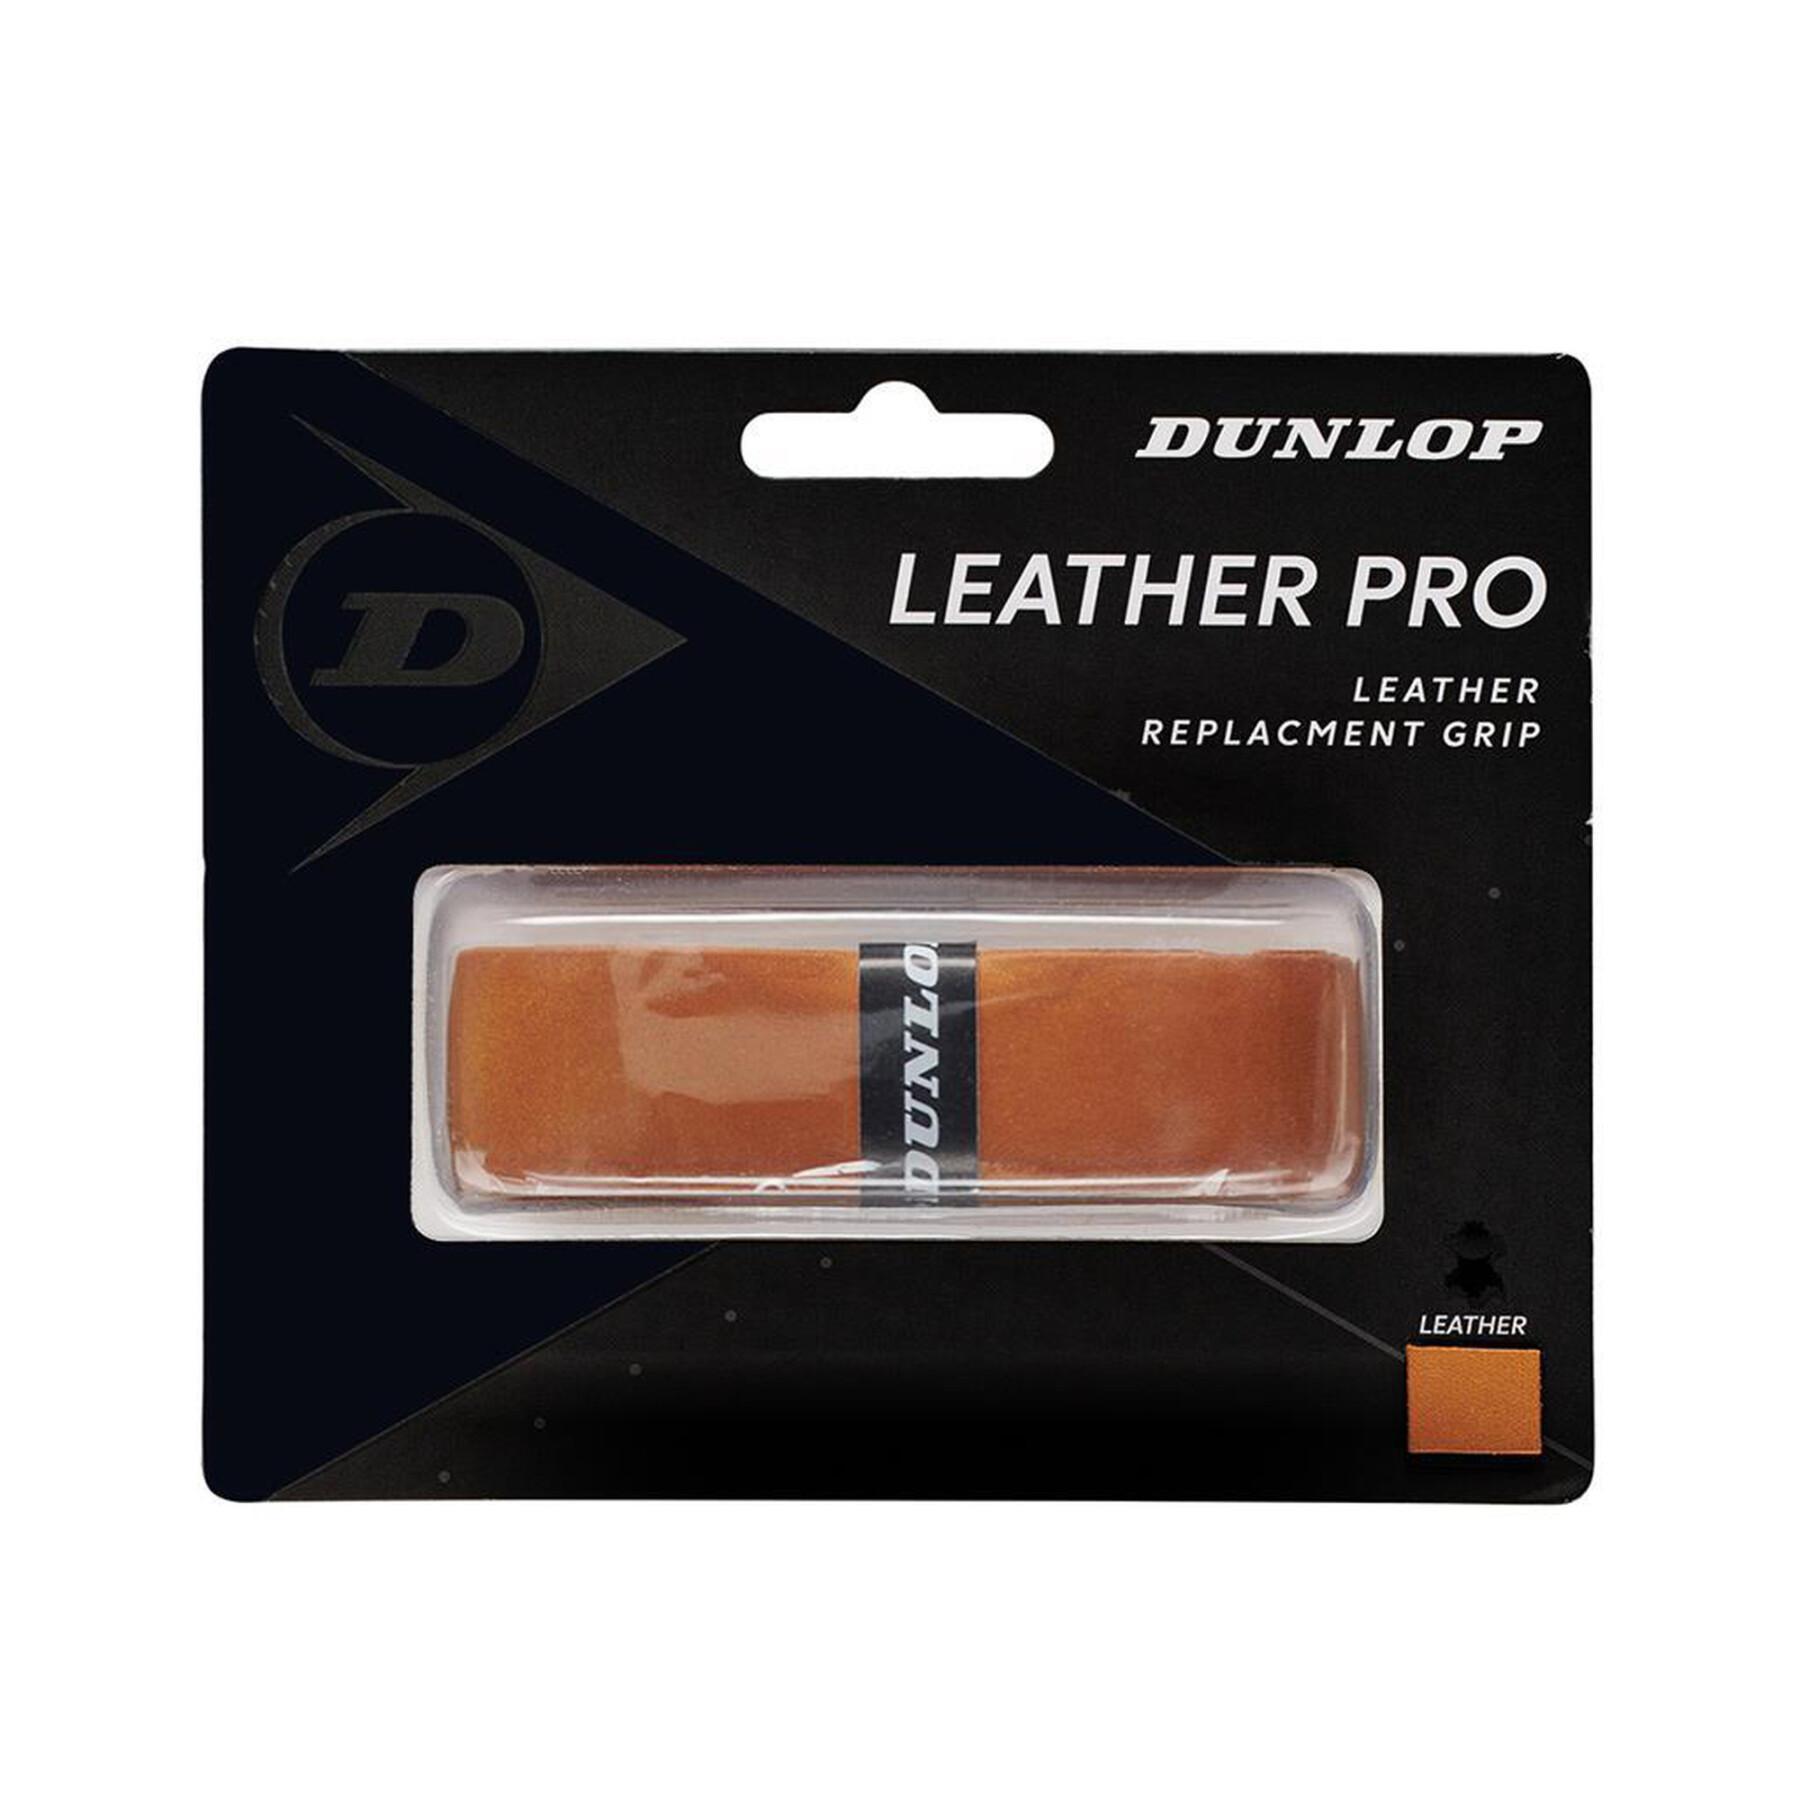 Grip Dunlop leather pro